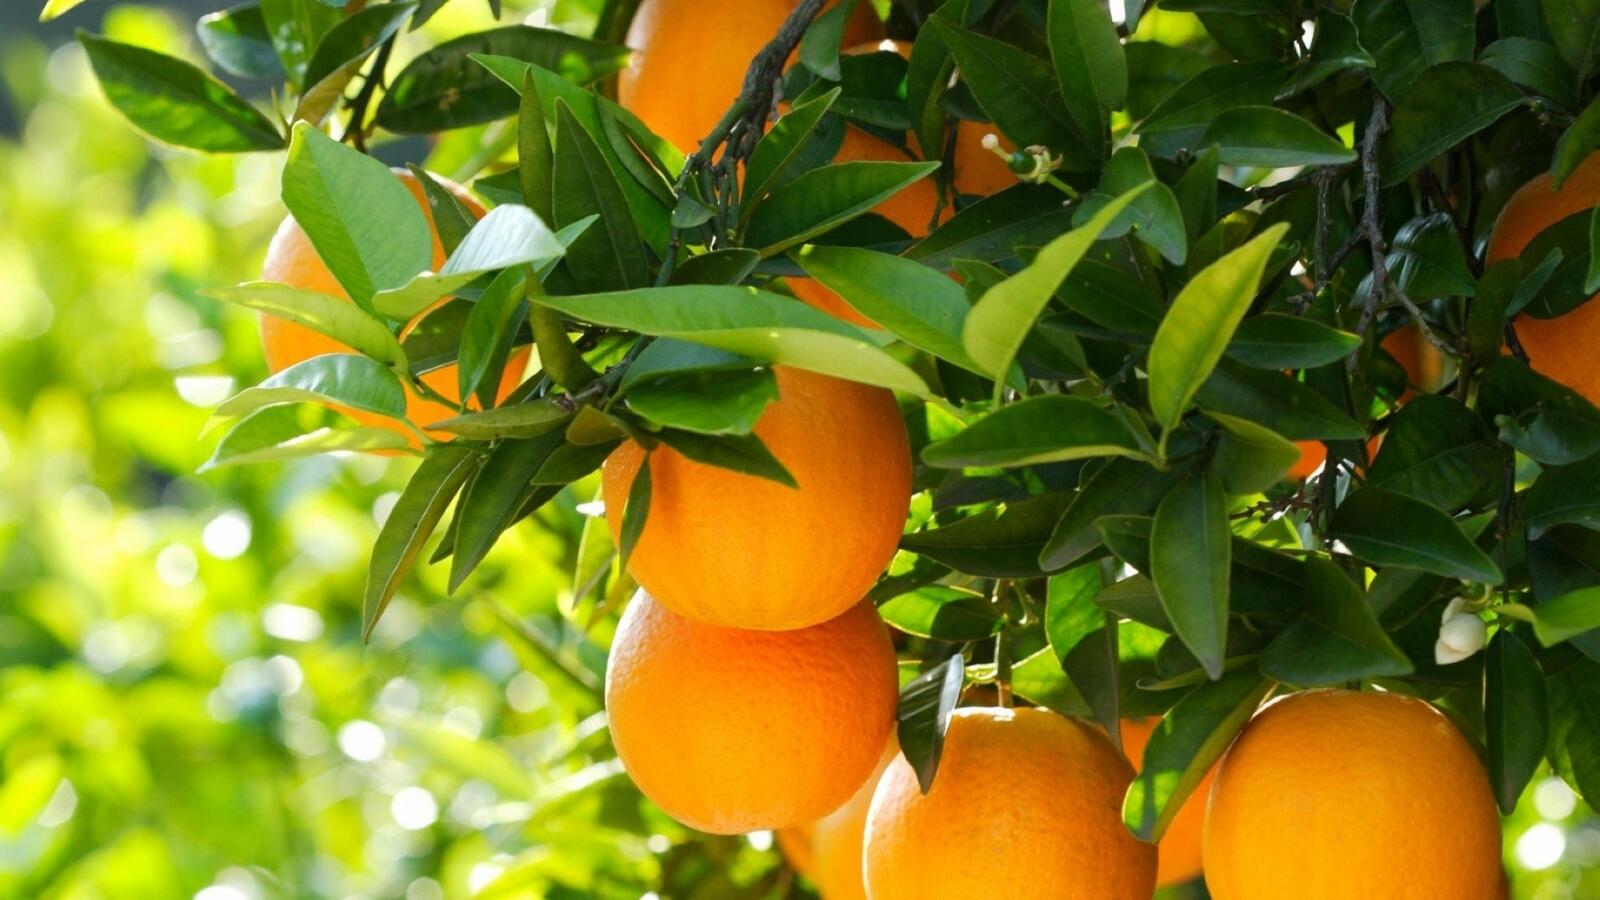 Wallpapers oranges citrus fruits on the desktop